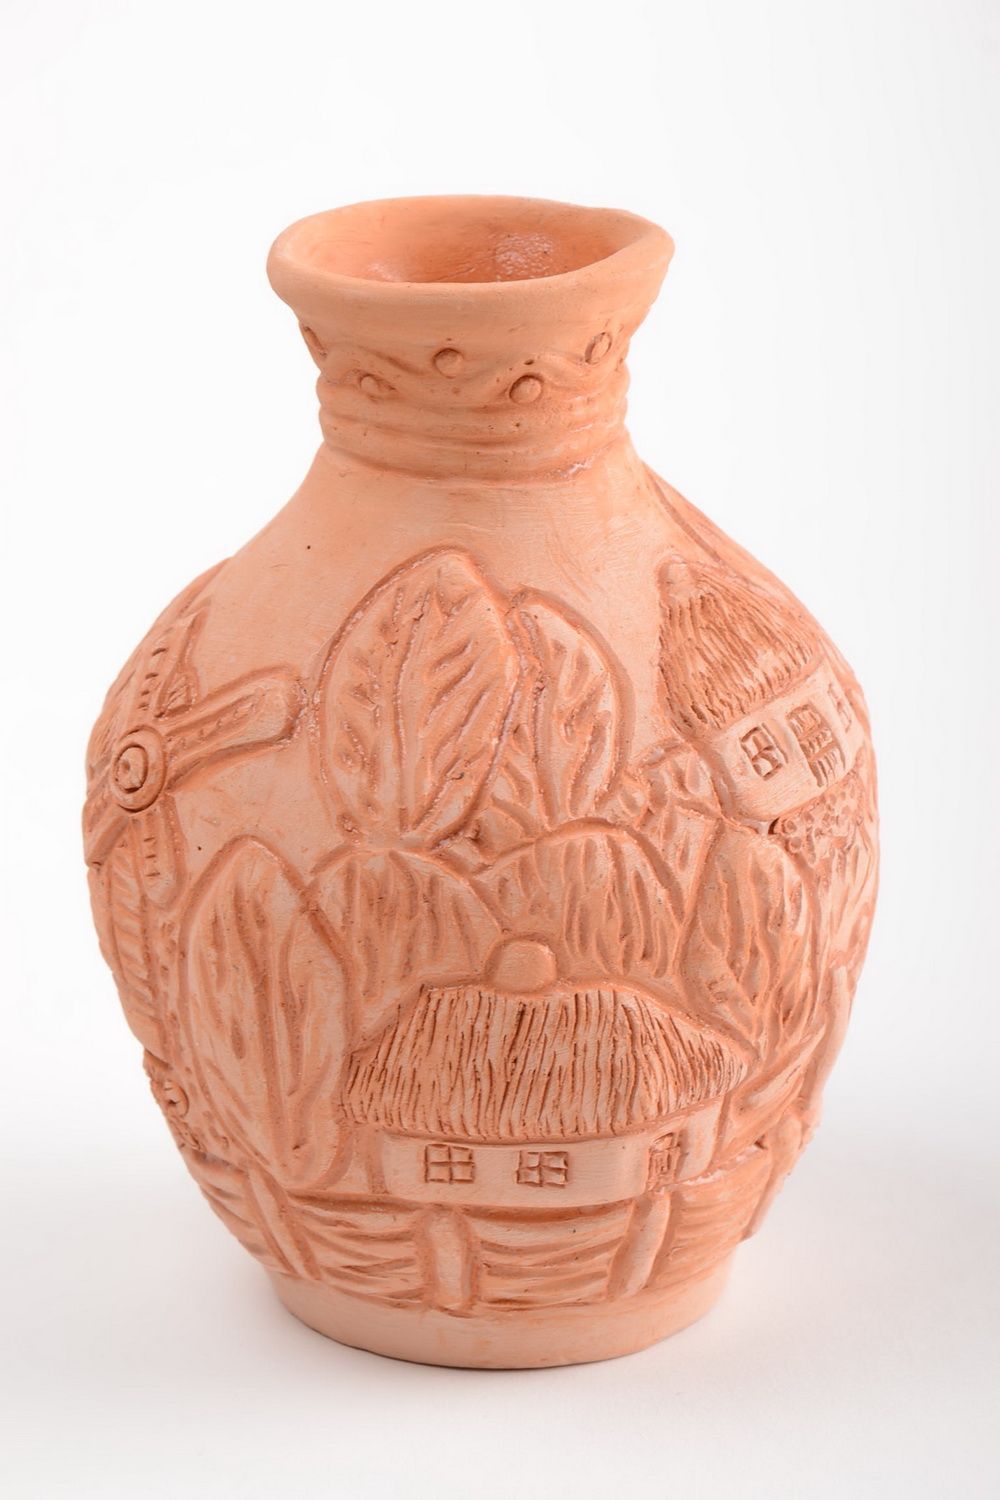 Small clay village style handmade flower vase 5,5, 0,69 lb photo 5